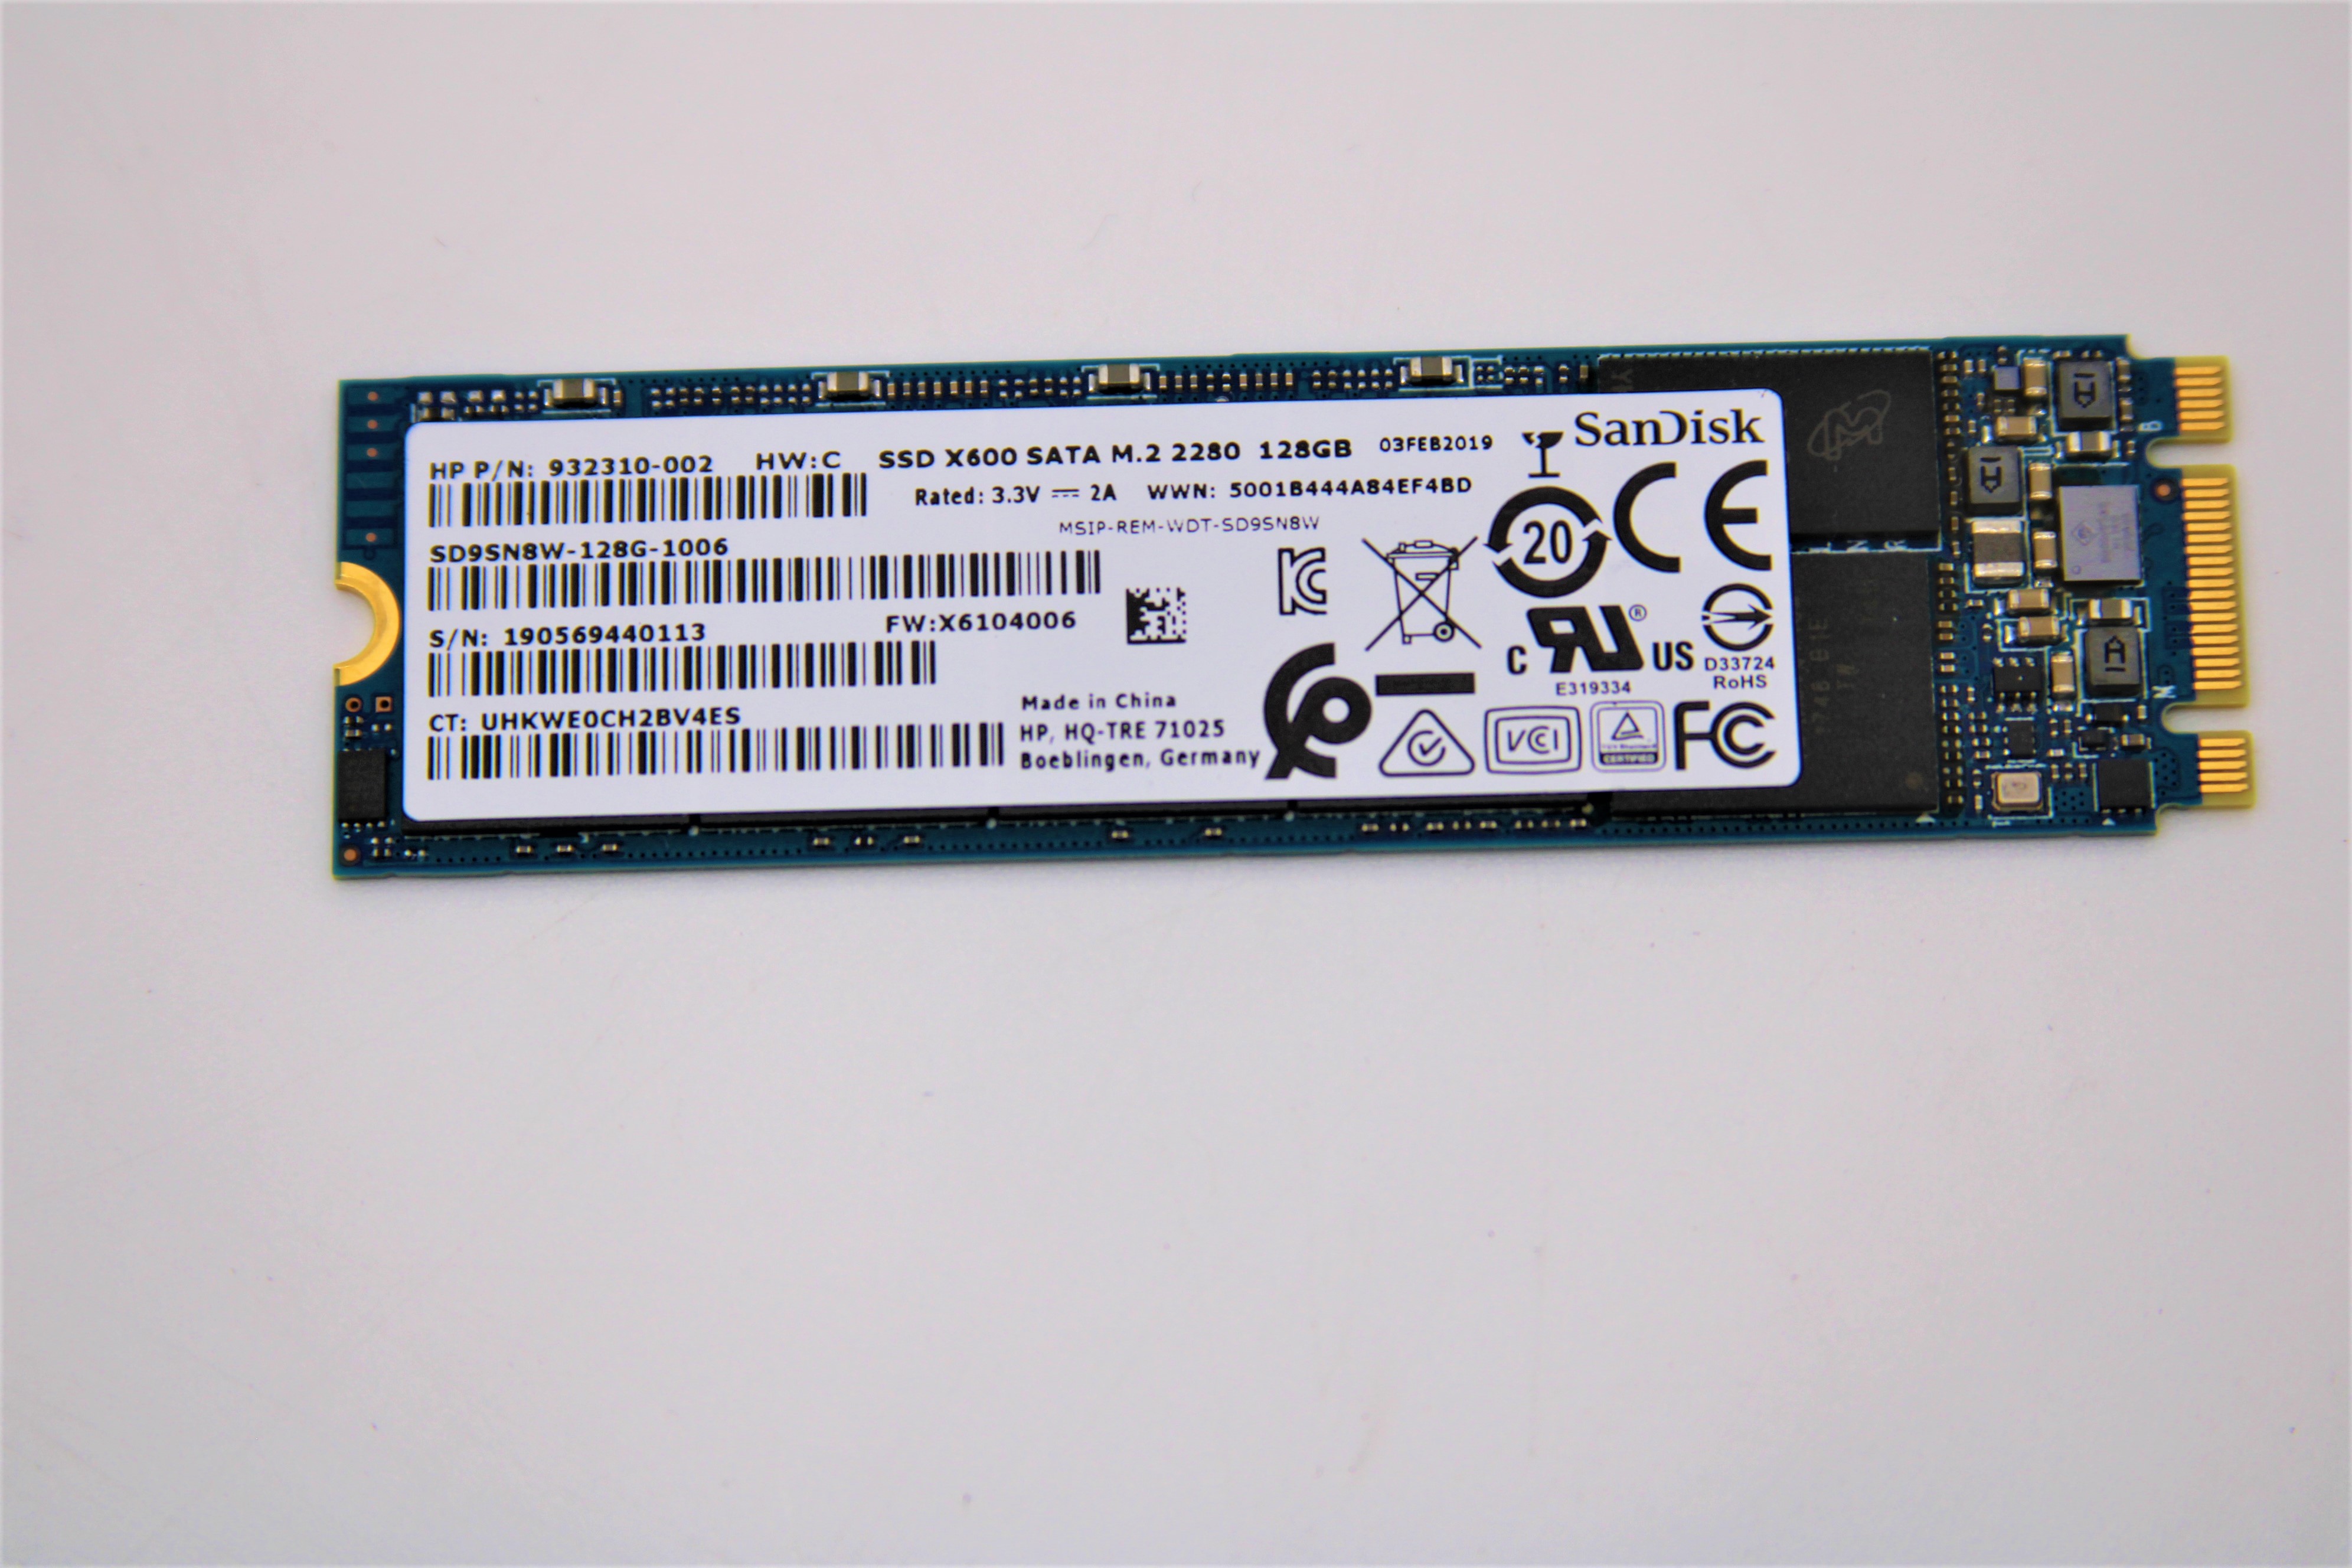 GENUINE HP SanDisk X600 128GB NVME PCIe SATA 6GB/s M.2 SSD 932310-002